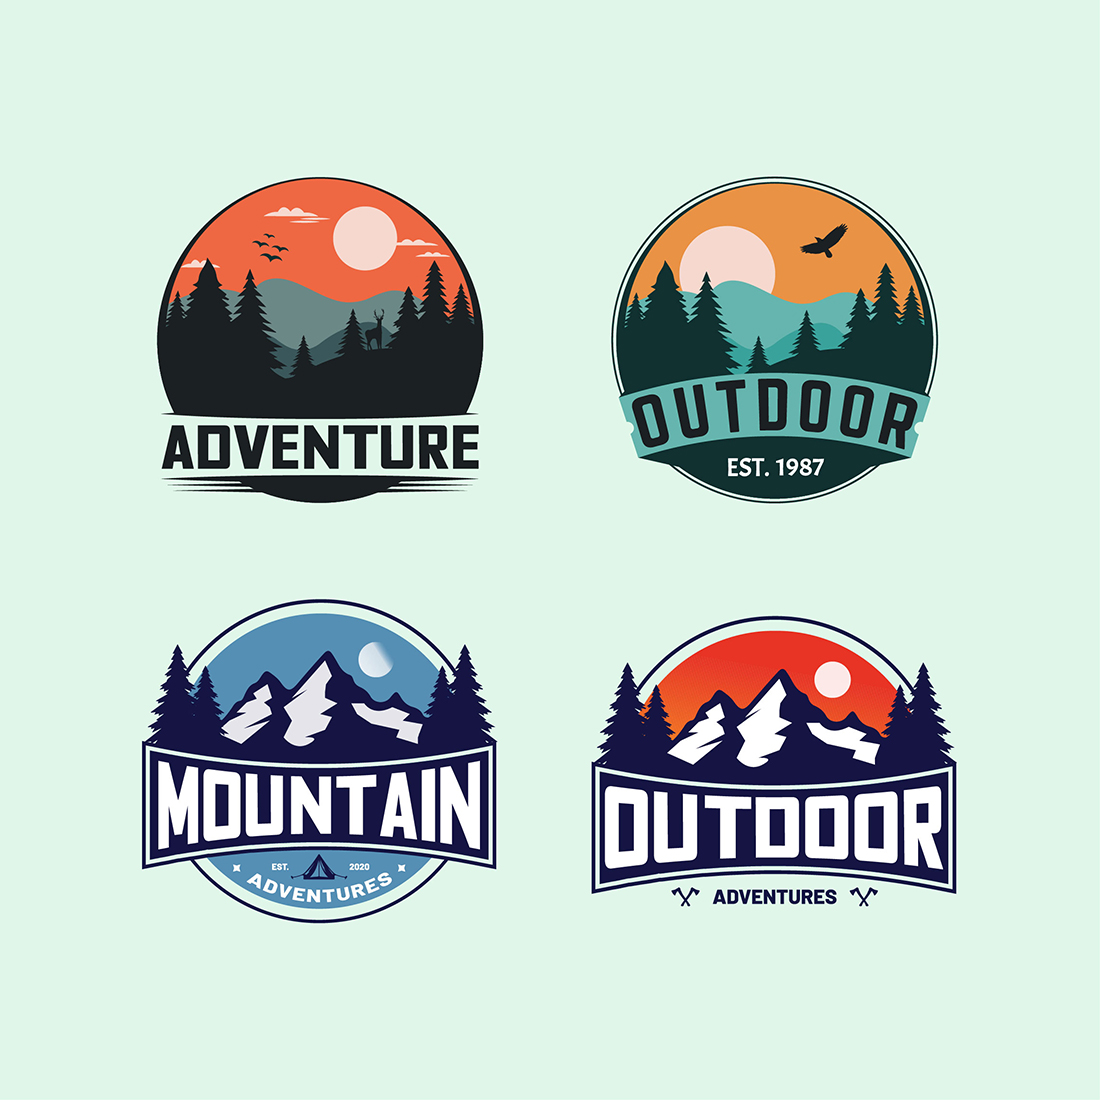 Adventure outdoor mountain logo design vector illustration cover image.